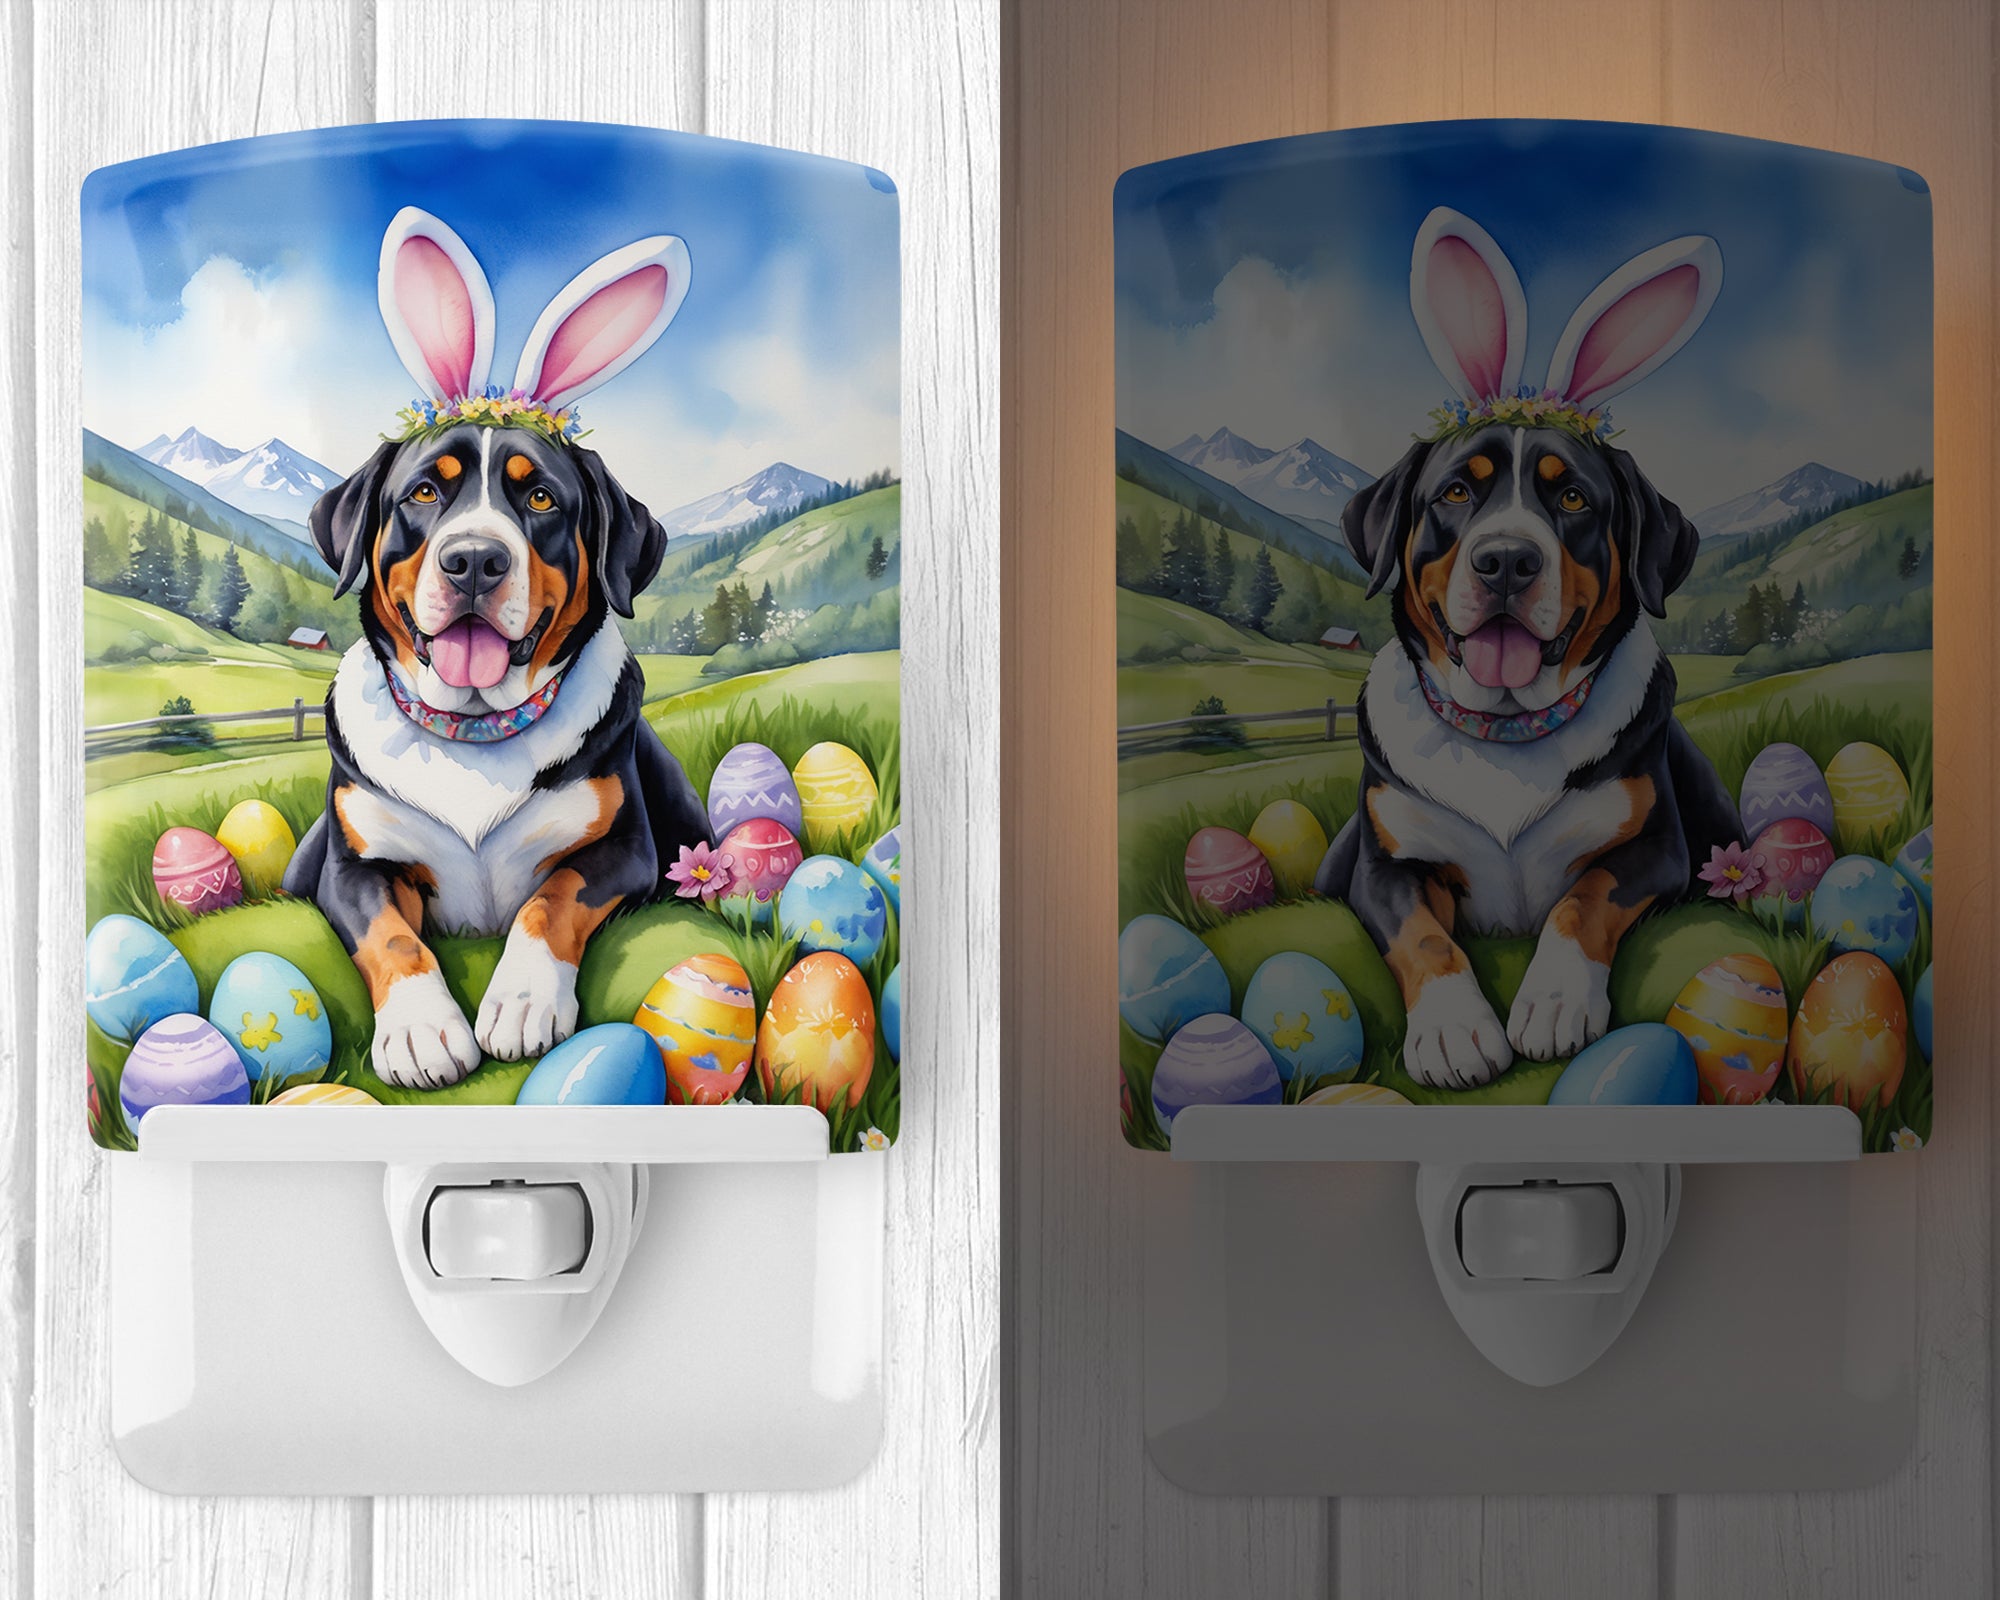 Buy this Greater Swiss Mountain Dog Easter Egg Hunt Ceramic Night Light